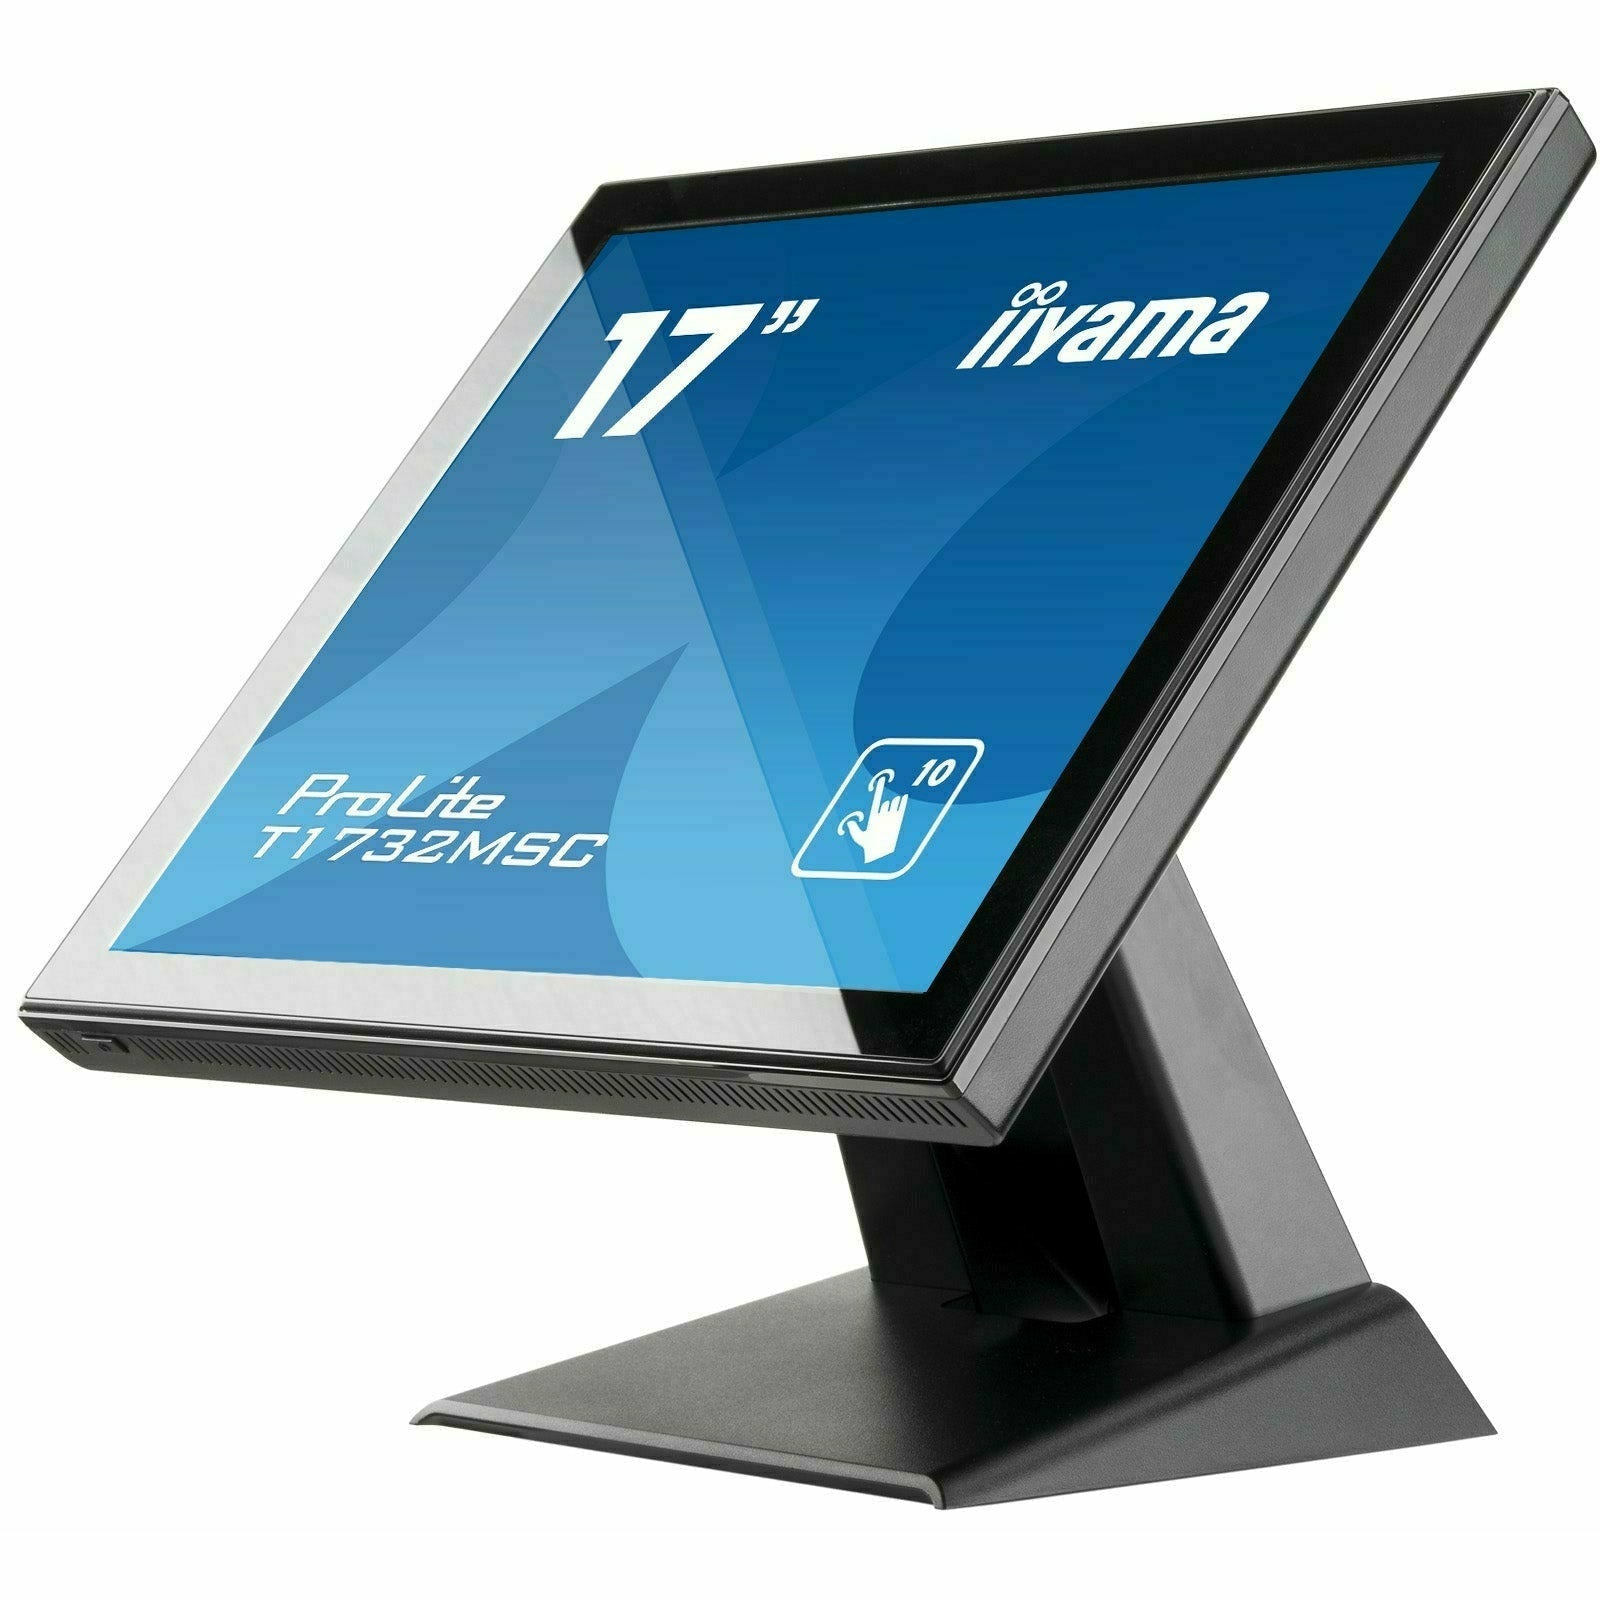 iiyama ProLite T1732MSC-B5X 17" Professional Capacitive Touch Screen Display